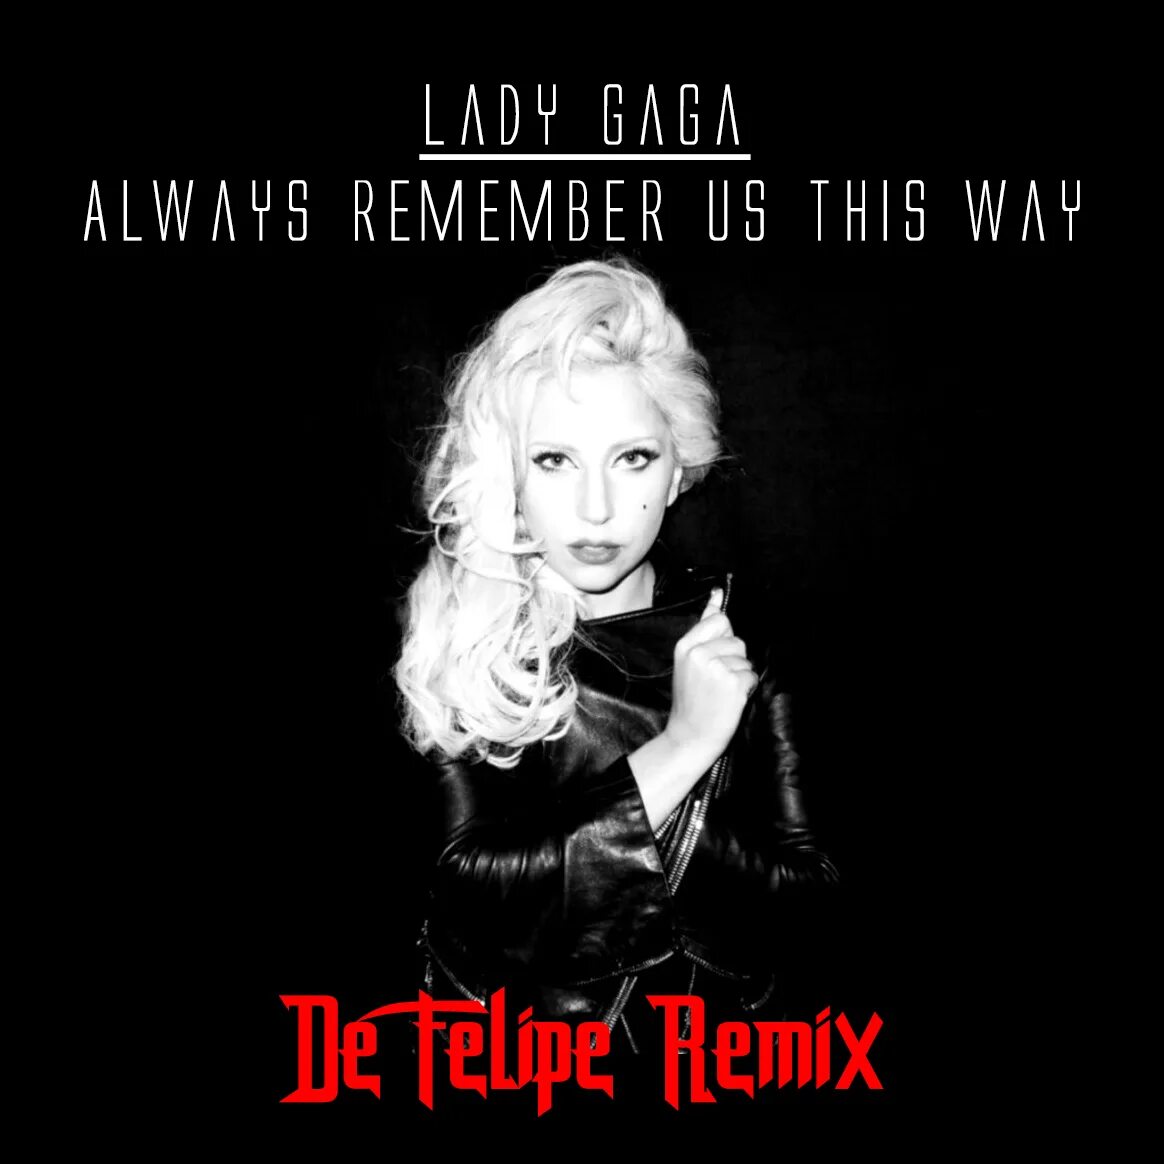 Lady gaga remember us this way перевод. Олвейс ремембер Гага. Леди Гага always remember. Леди Гага always remember фото. Always remember us this way Lady Gaga слушать.